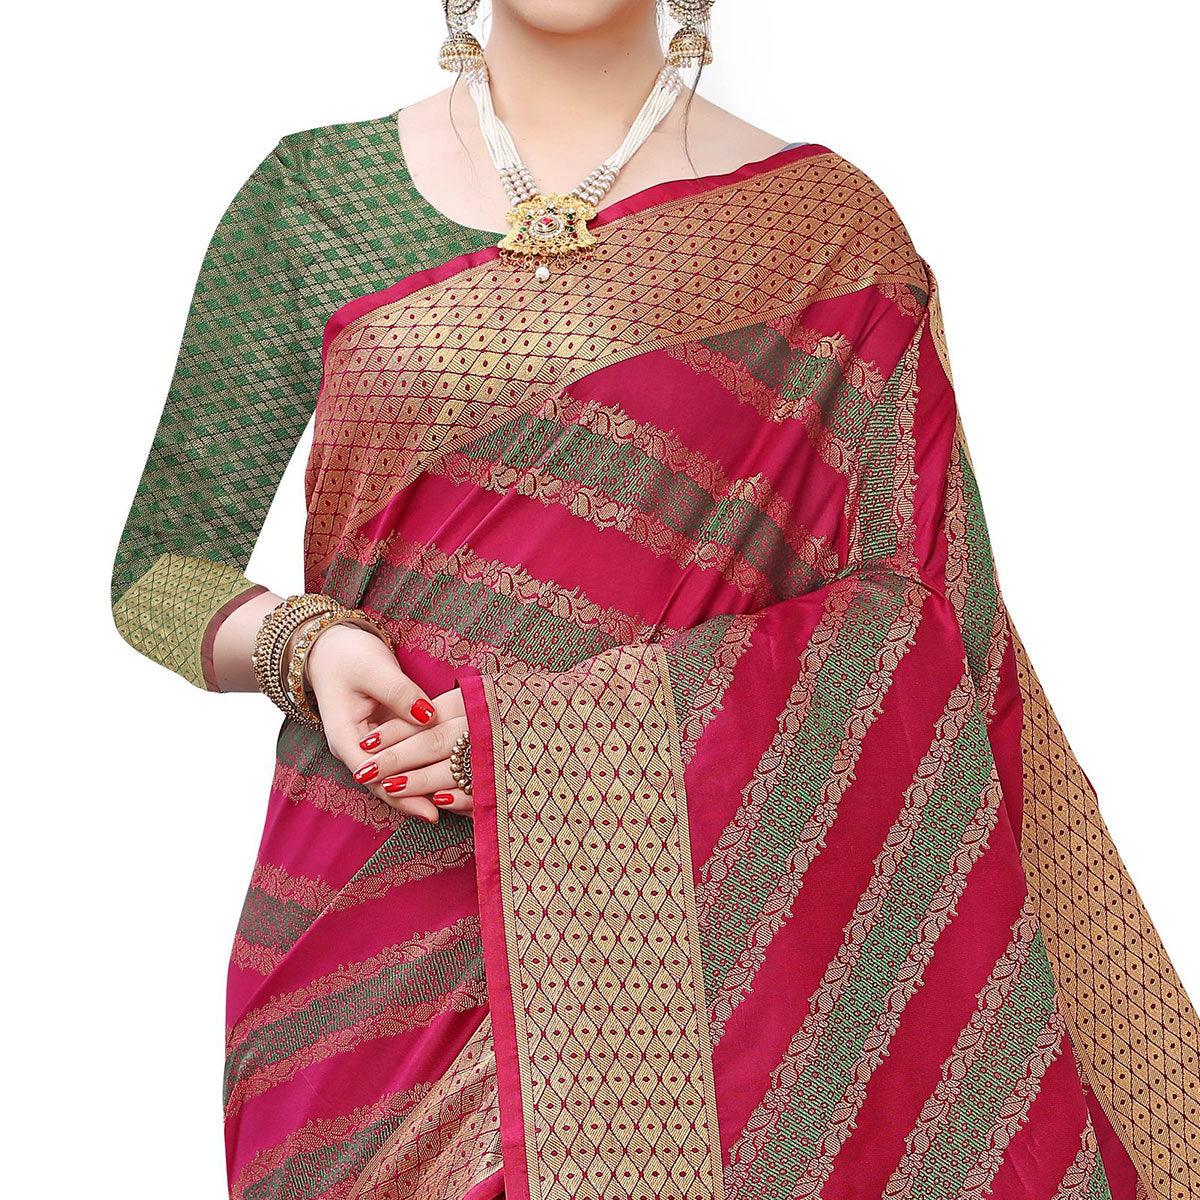 Radiant Wine Colored Festive Wear Woven Kanjivaram Silk Saree - Peachmode